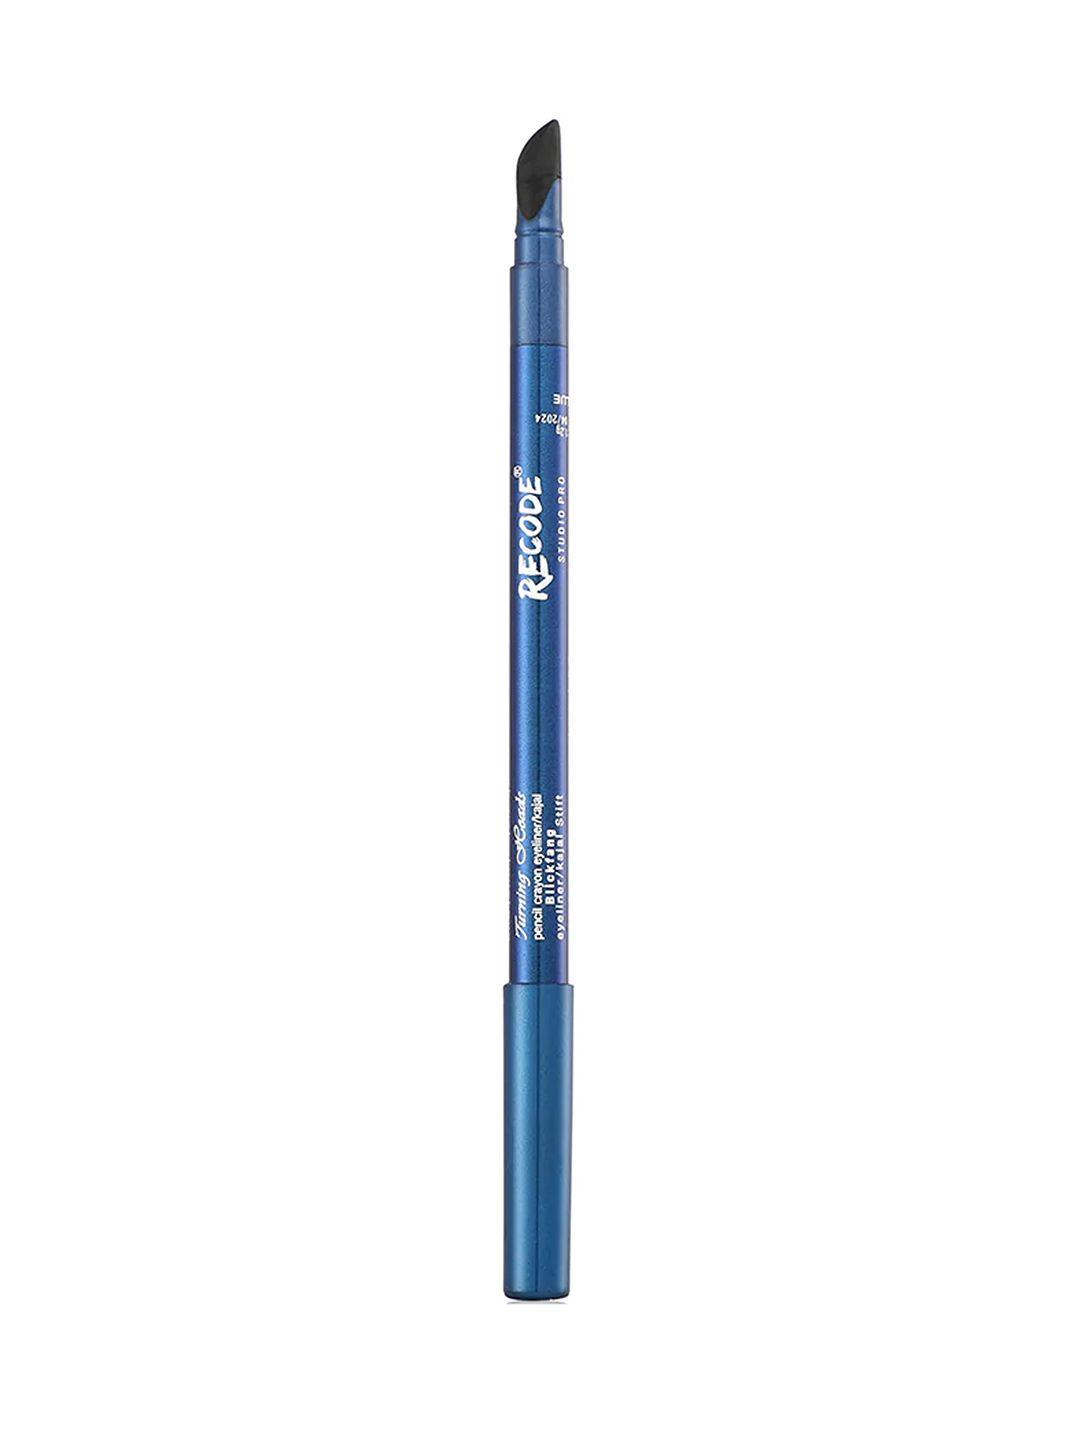 recode-studio-pro-turning-heads-crayon-gel-eyeliner-cum-kajal-pencil-1.20-g-lit-blue-02